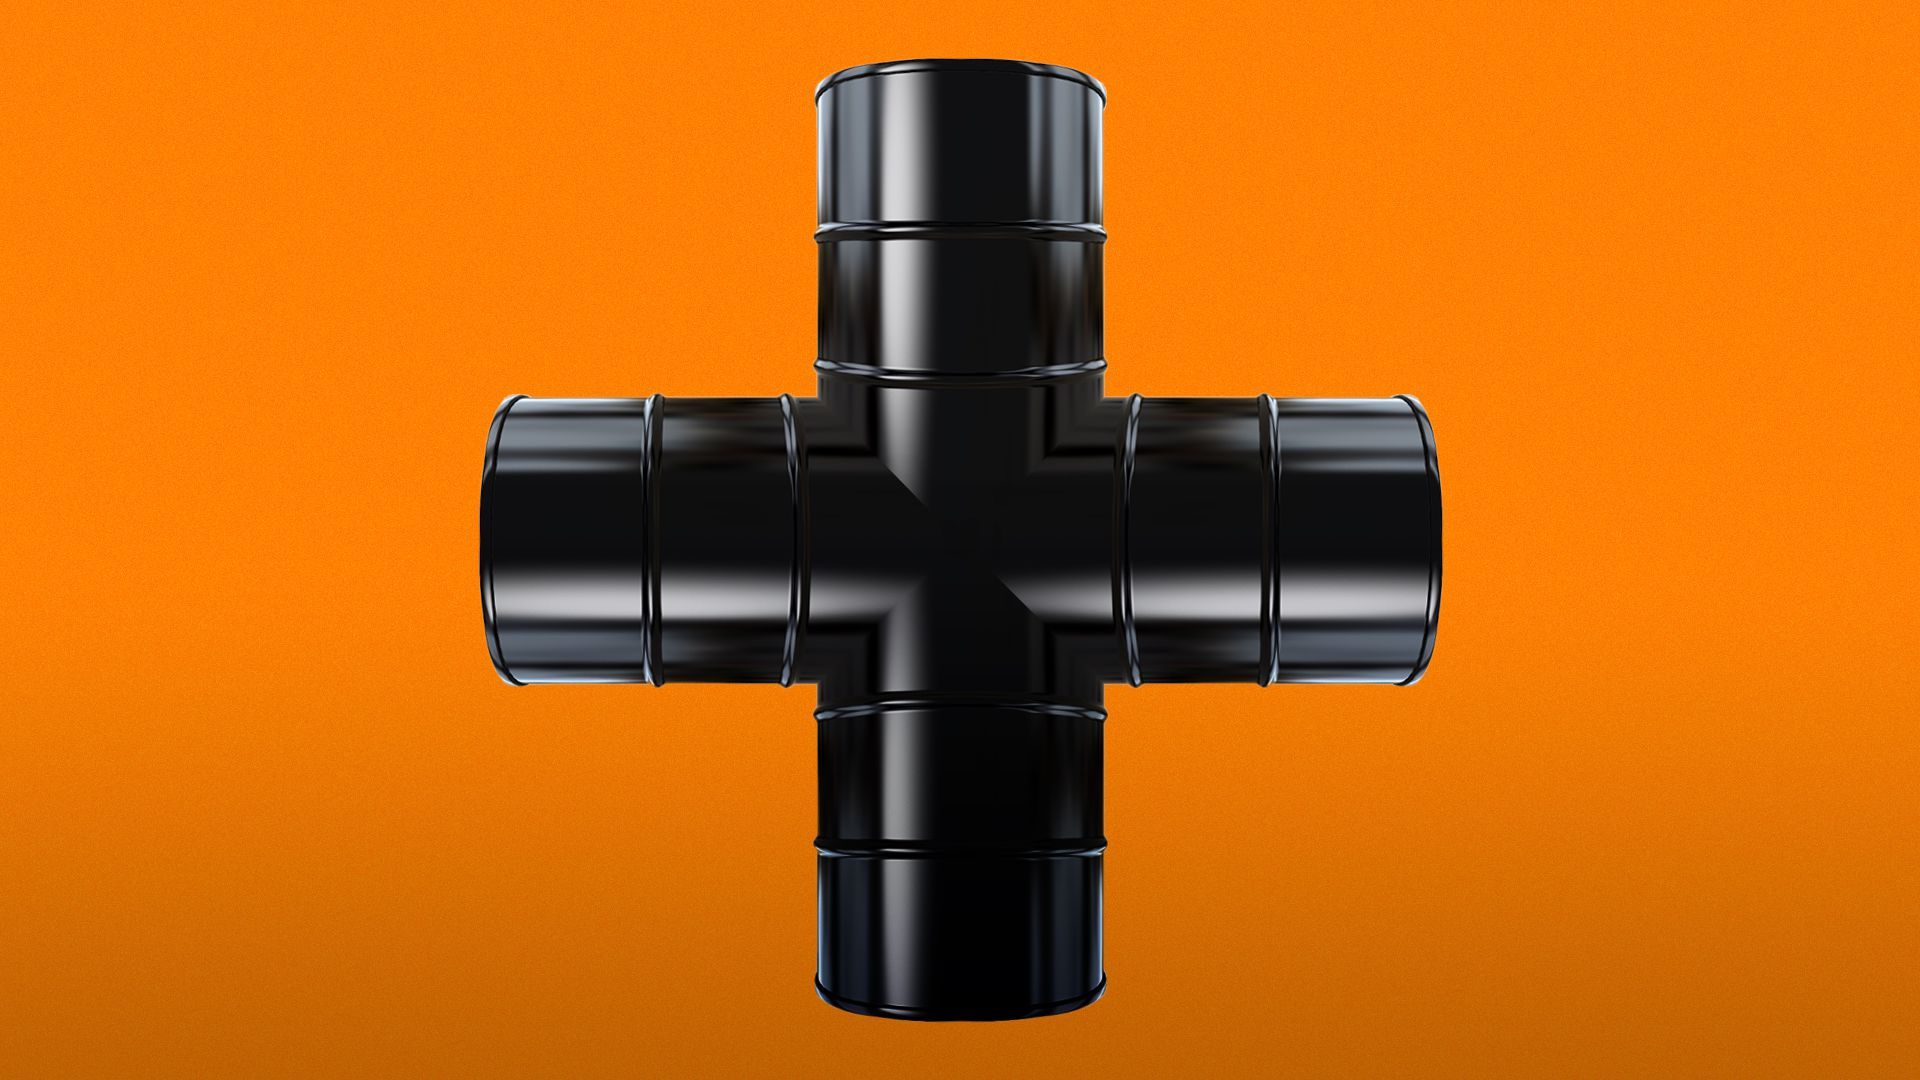 Illustration of a plus sign formed by oil barrels